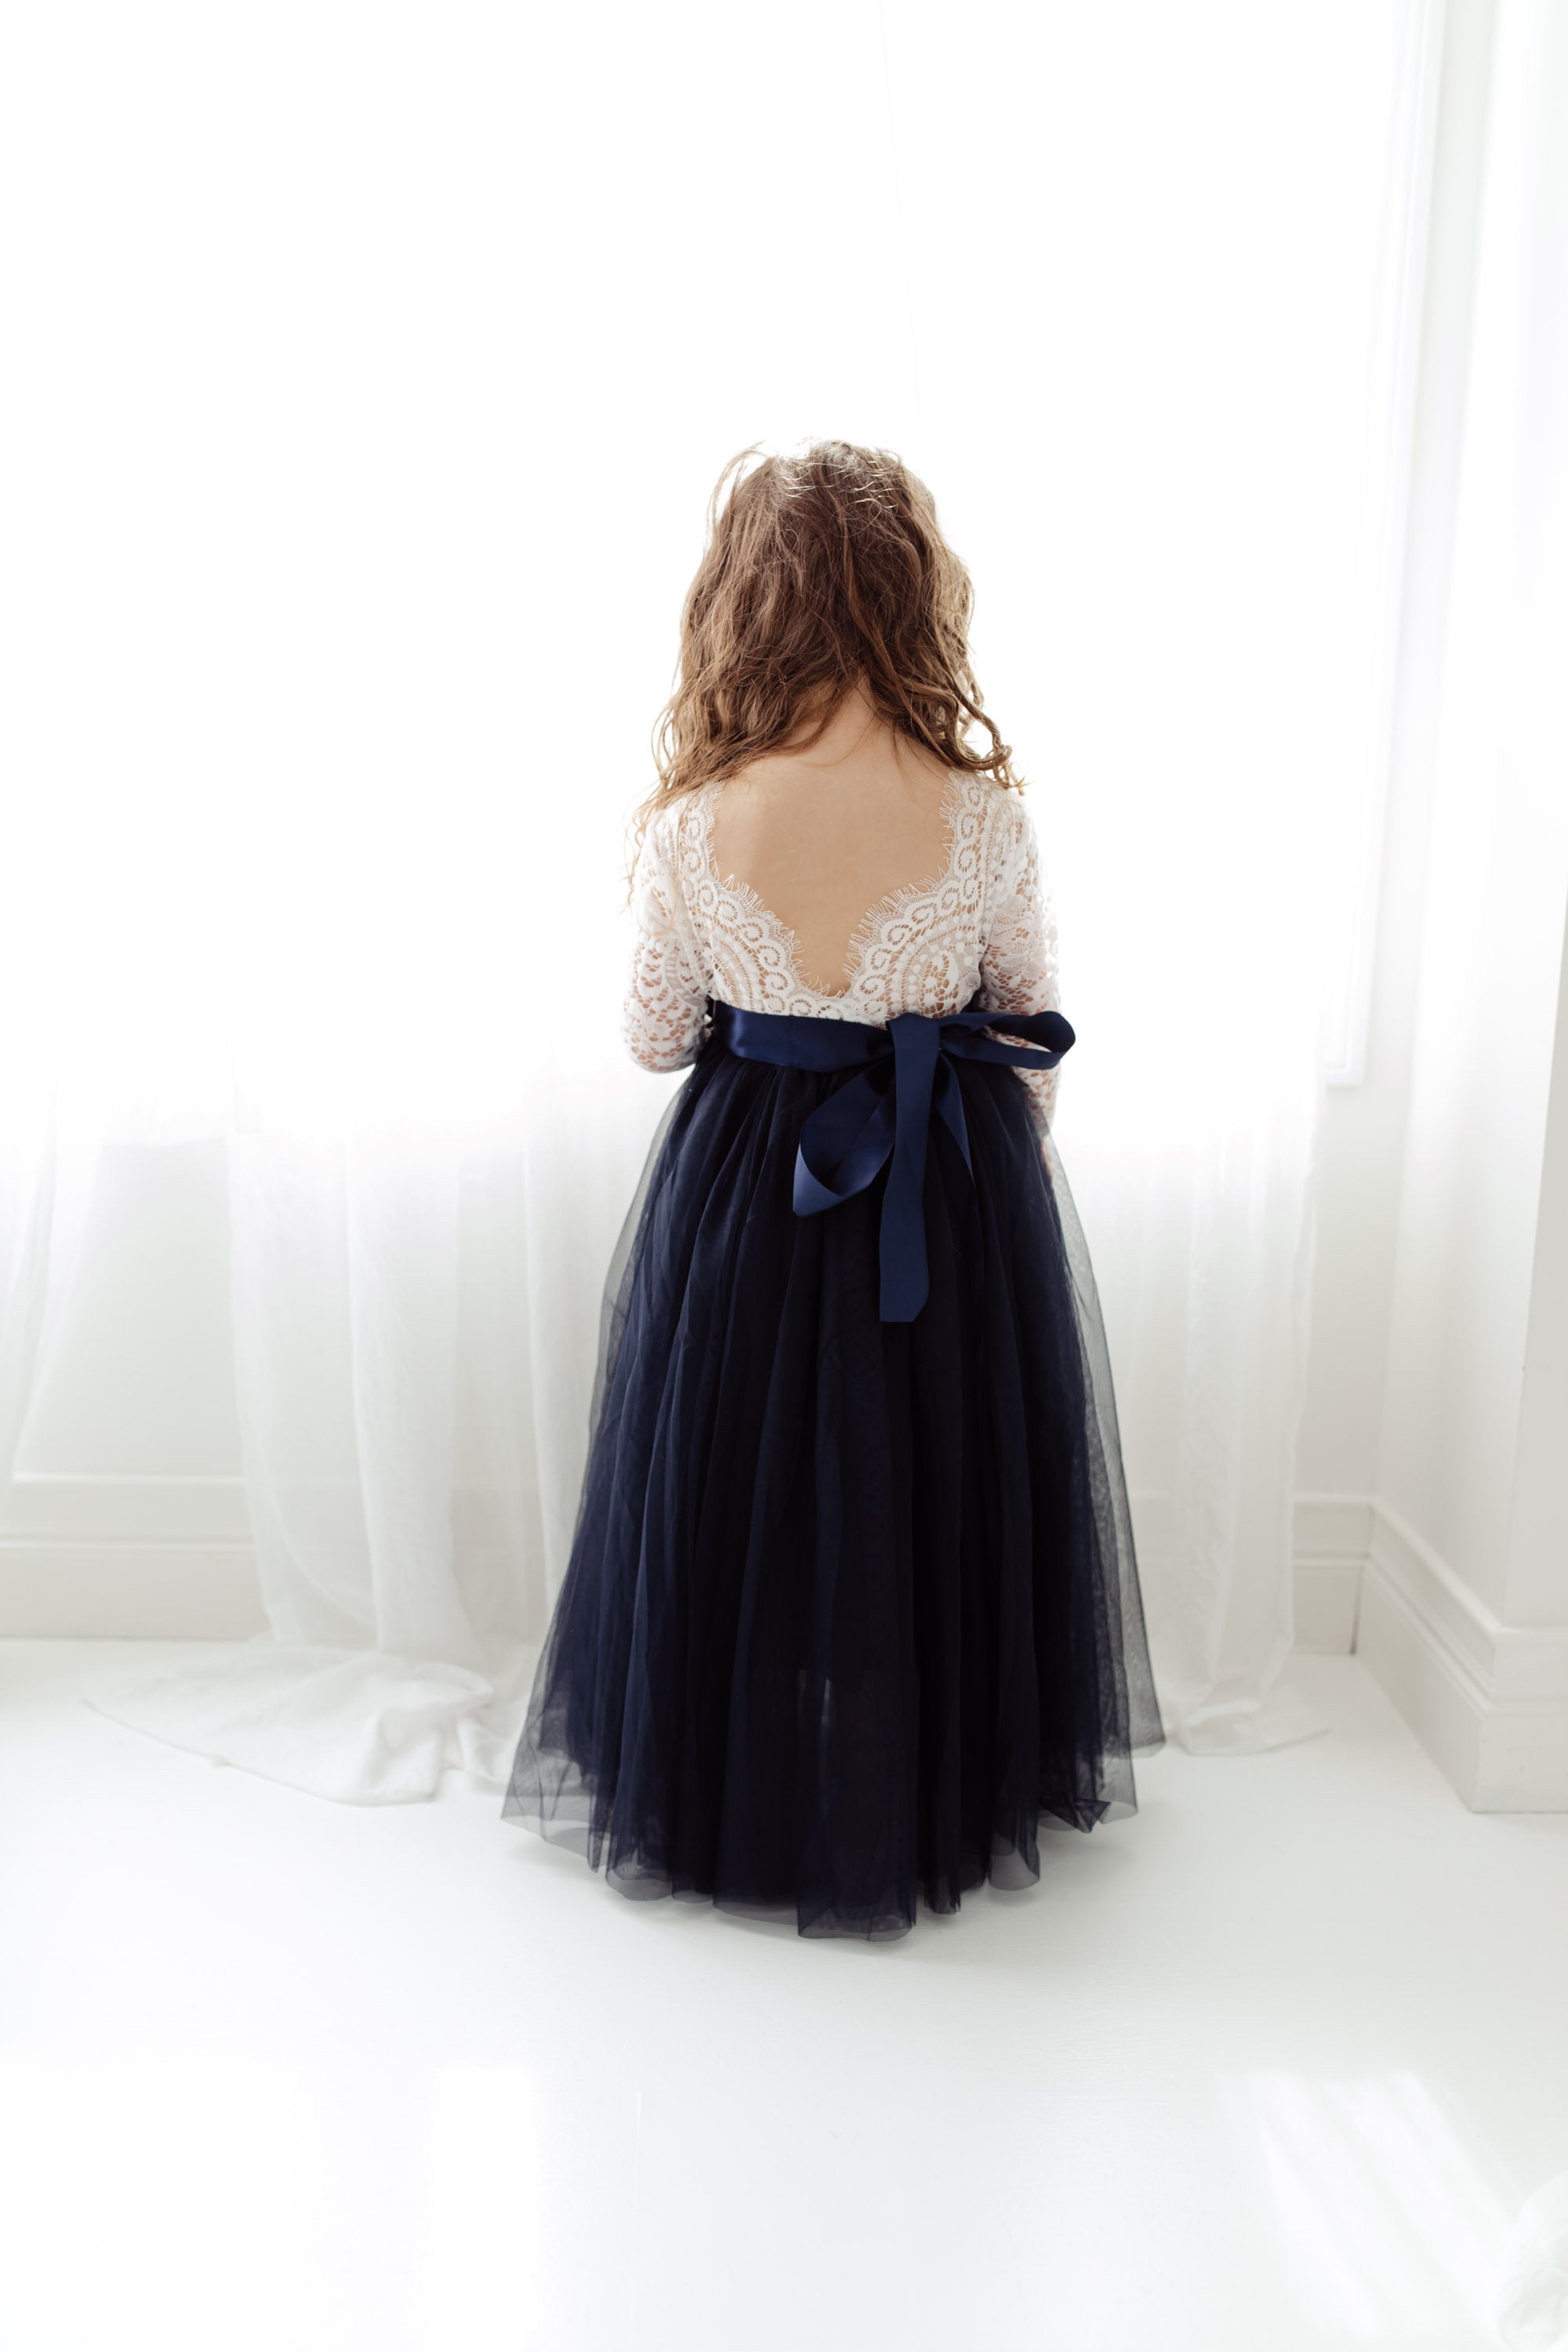 Blue Backless Satin Dress / Long Woman Formal Prom Dress / Deep V